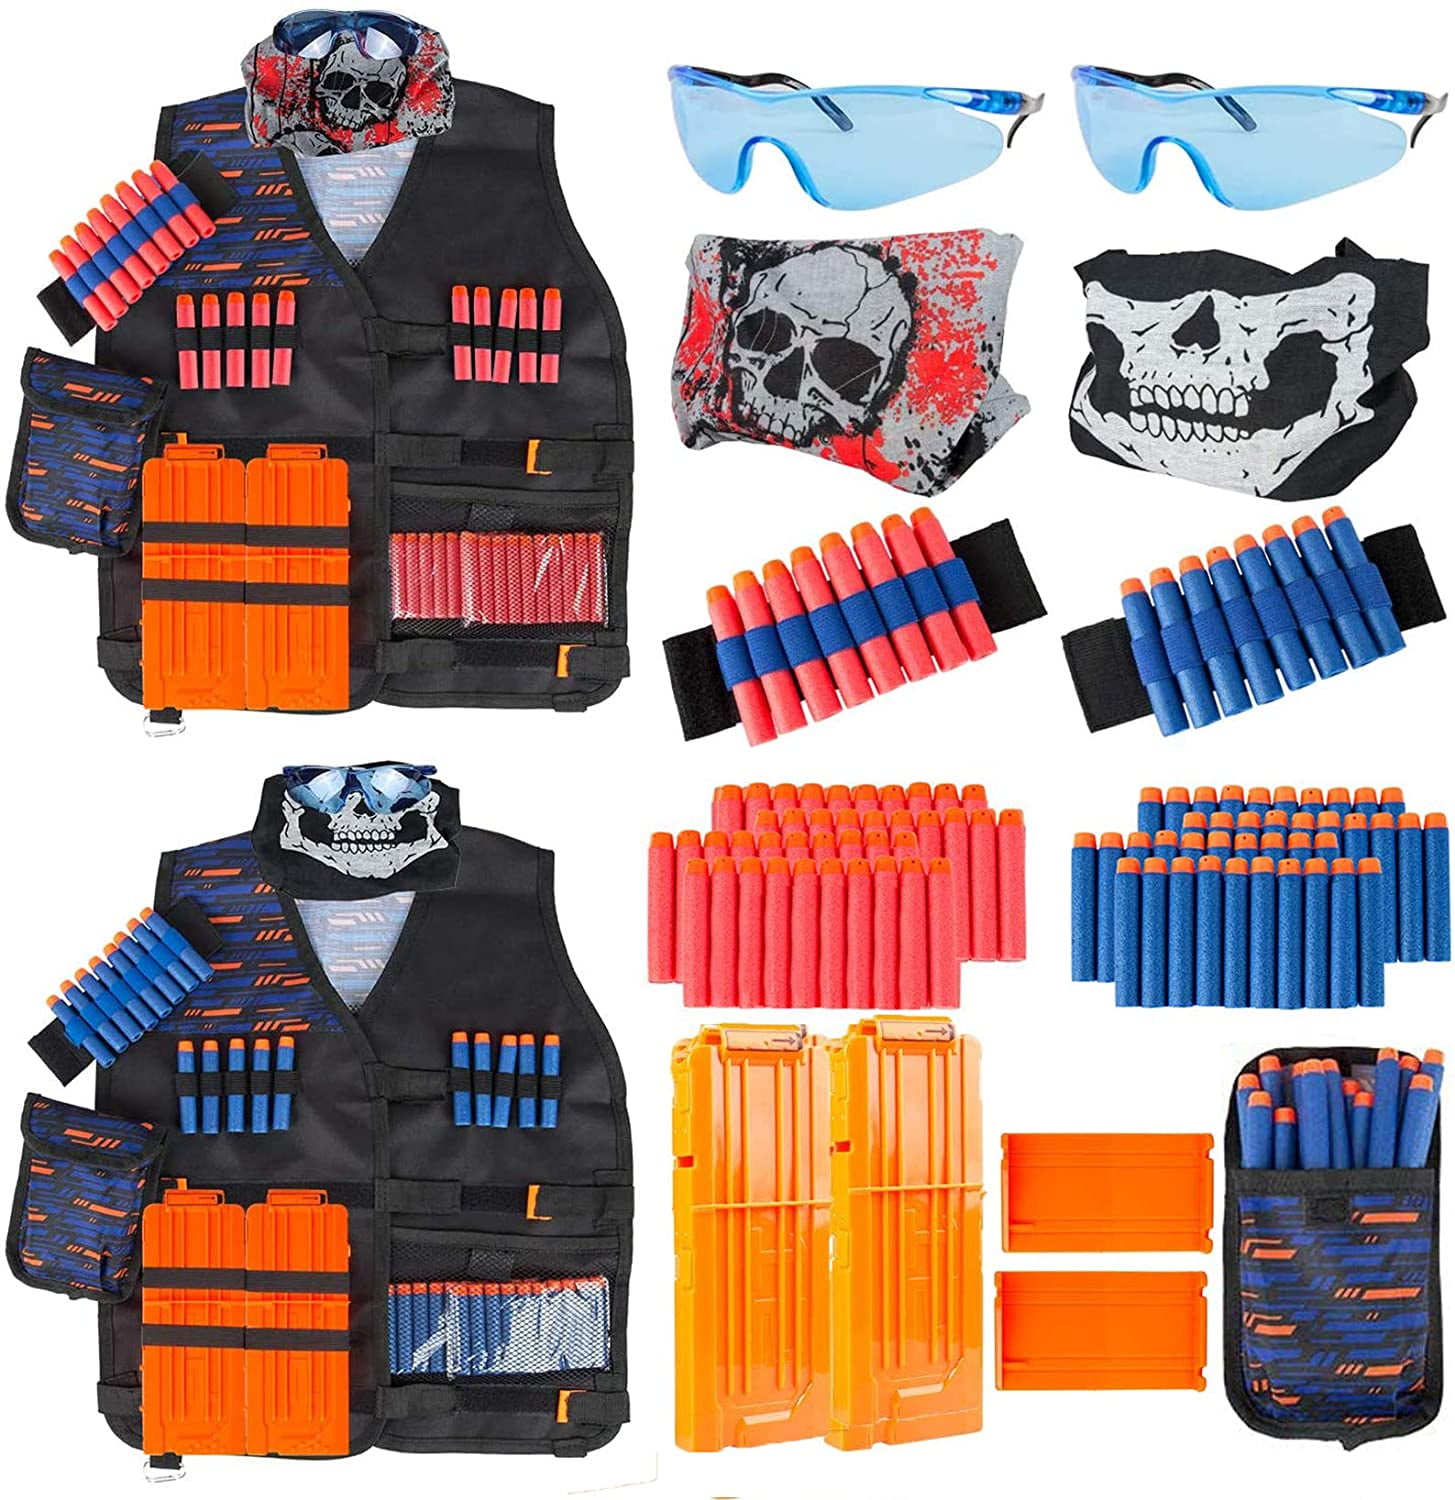 Nerf Guns Tactical Vest Kit for Kids N-Strike Elite Series with Darts & Glasses 